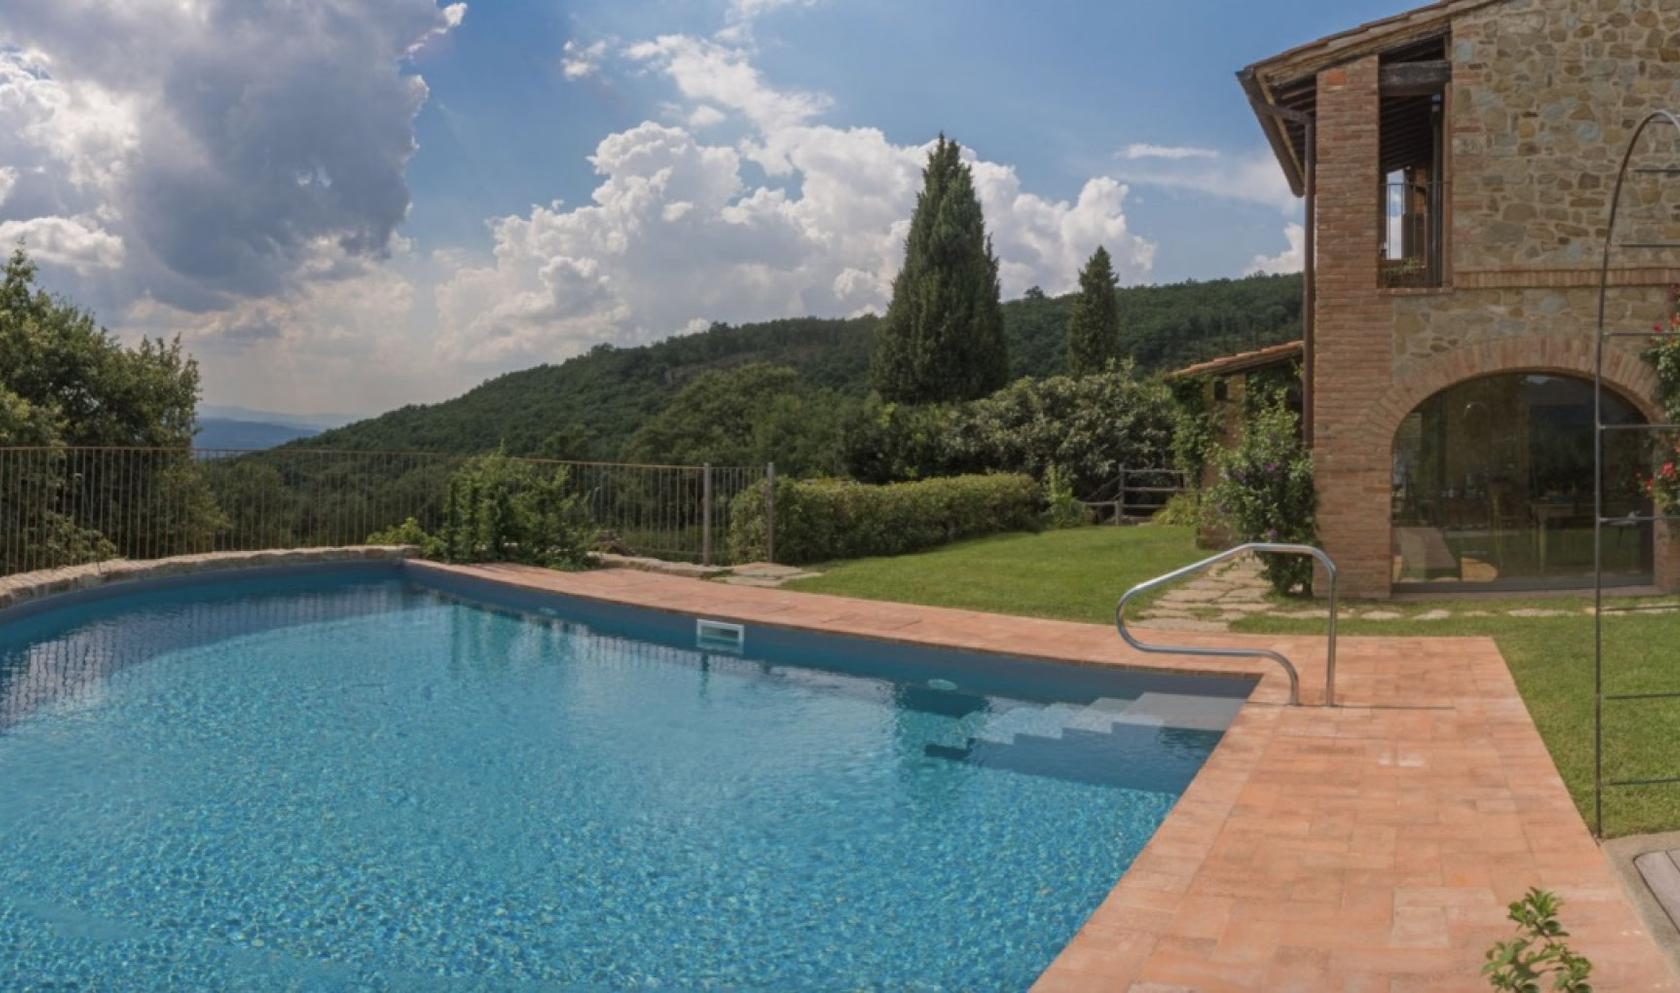 Toscana Immobiliare - Luxury Villa Rentals Tuscany Villas with Private Pool